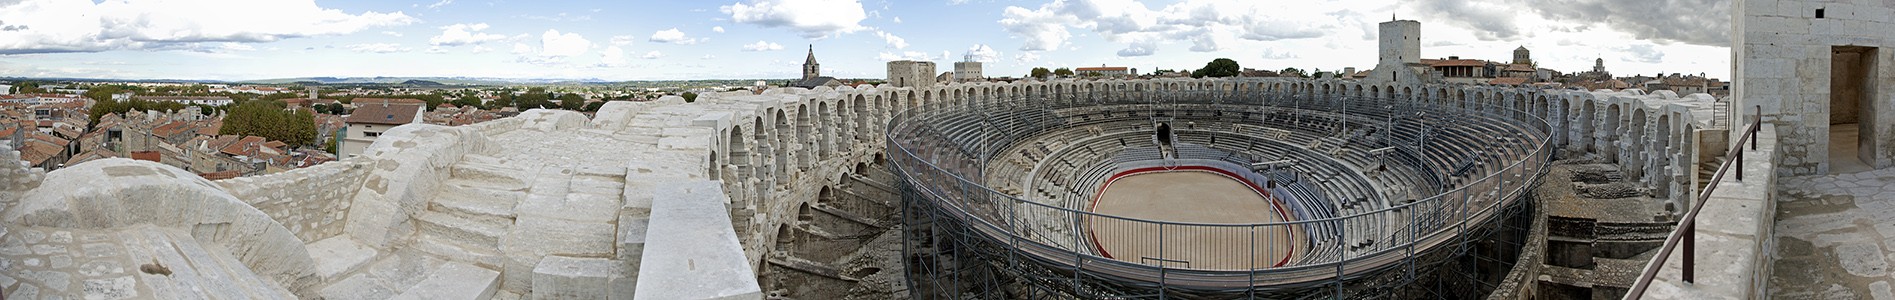 Amphitheater (Arènes d'Arles) Arles